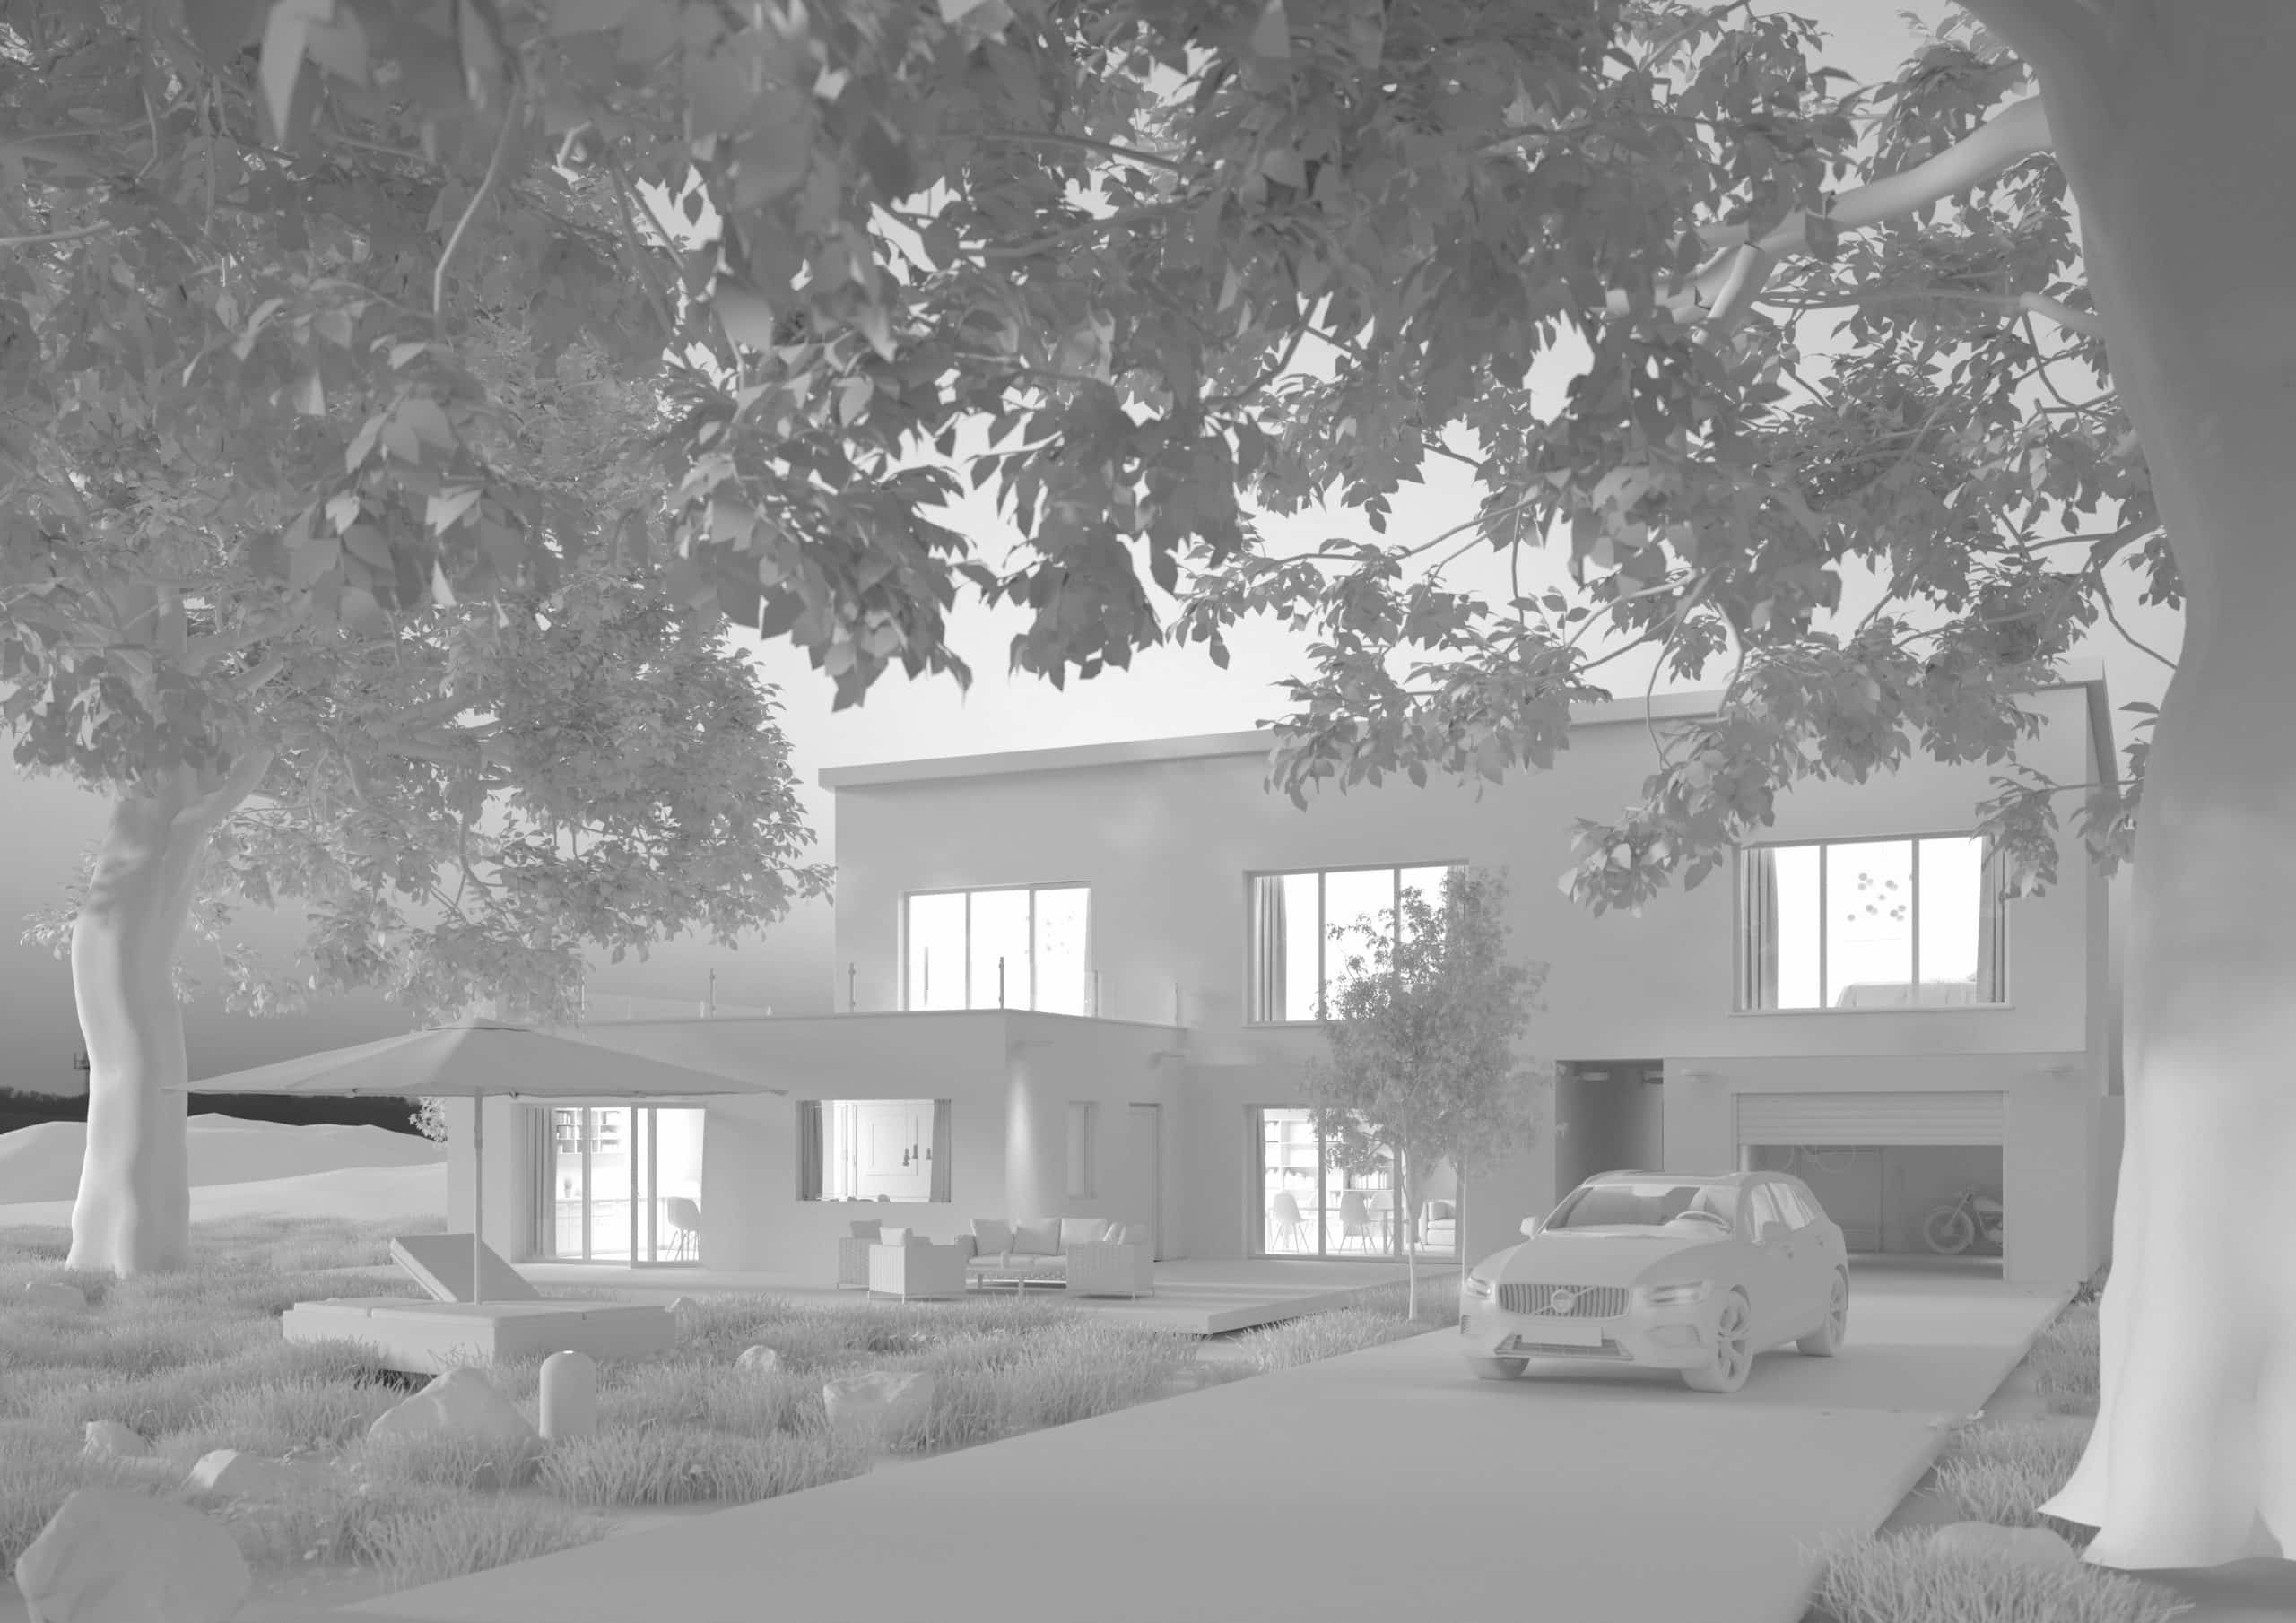 Unbearbeitete Ansicht | Land­haus | 3D-Visualisierung, Architecture, Automotive, Landscape | full CGI / 3D: Entwurf, Modelling, Lightning, Shading, Rendering